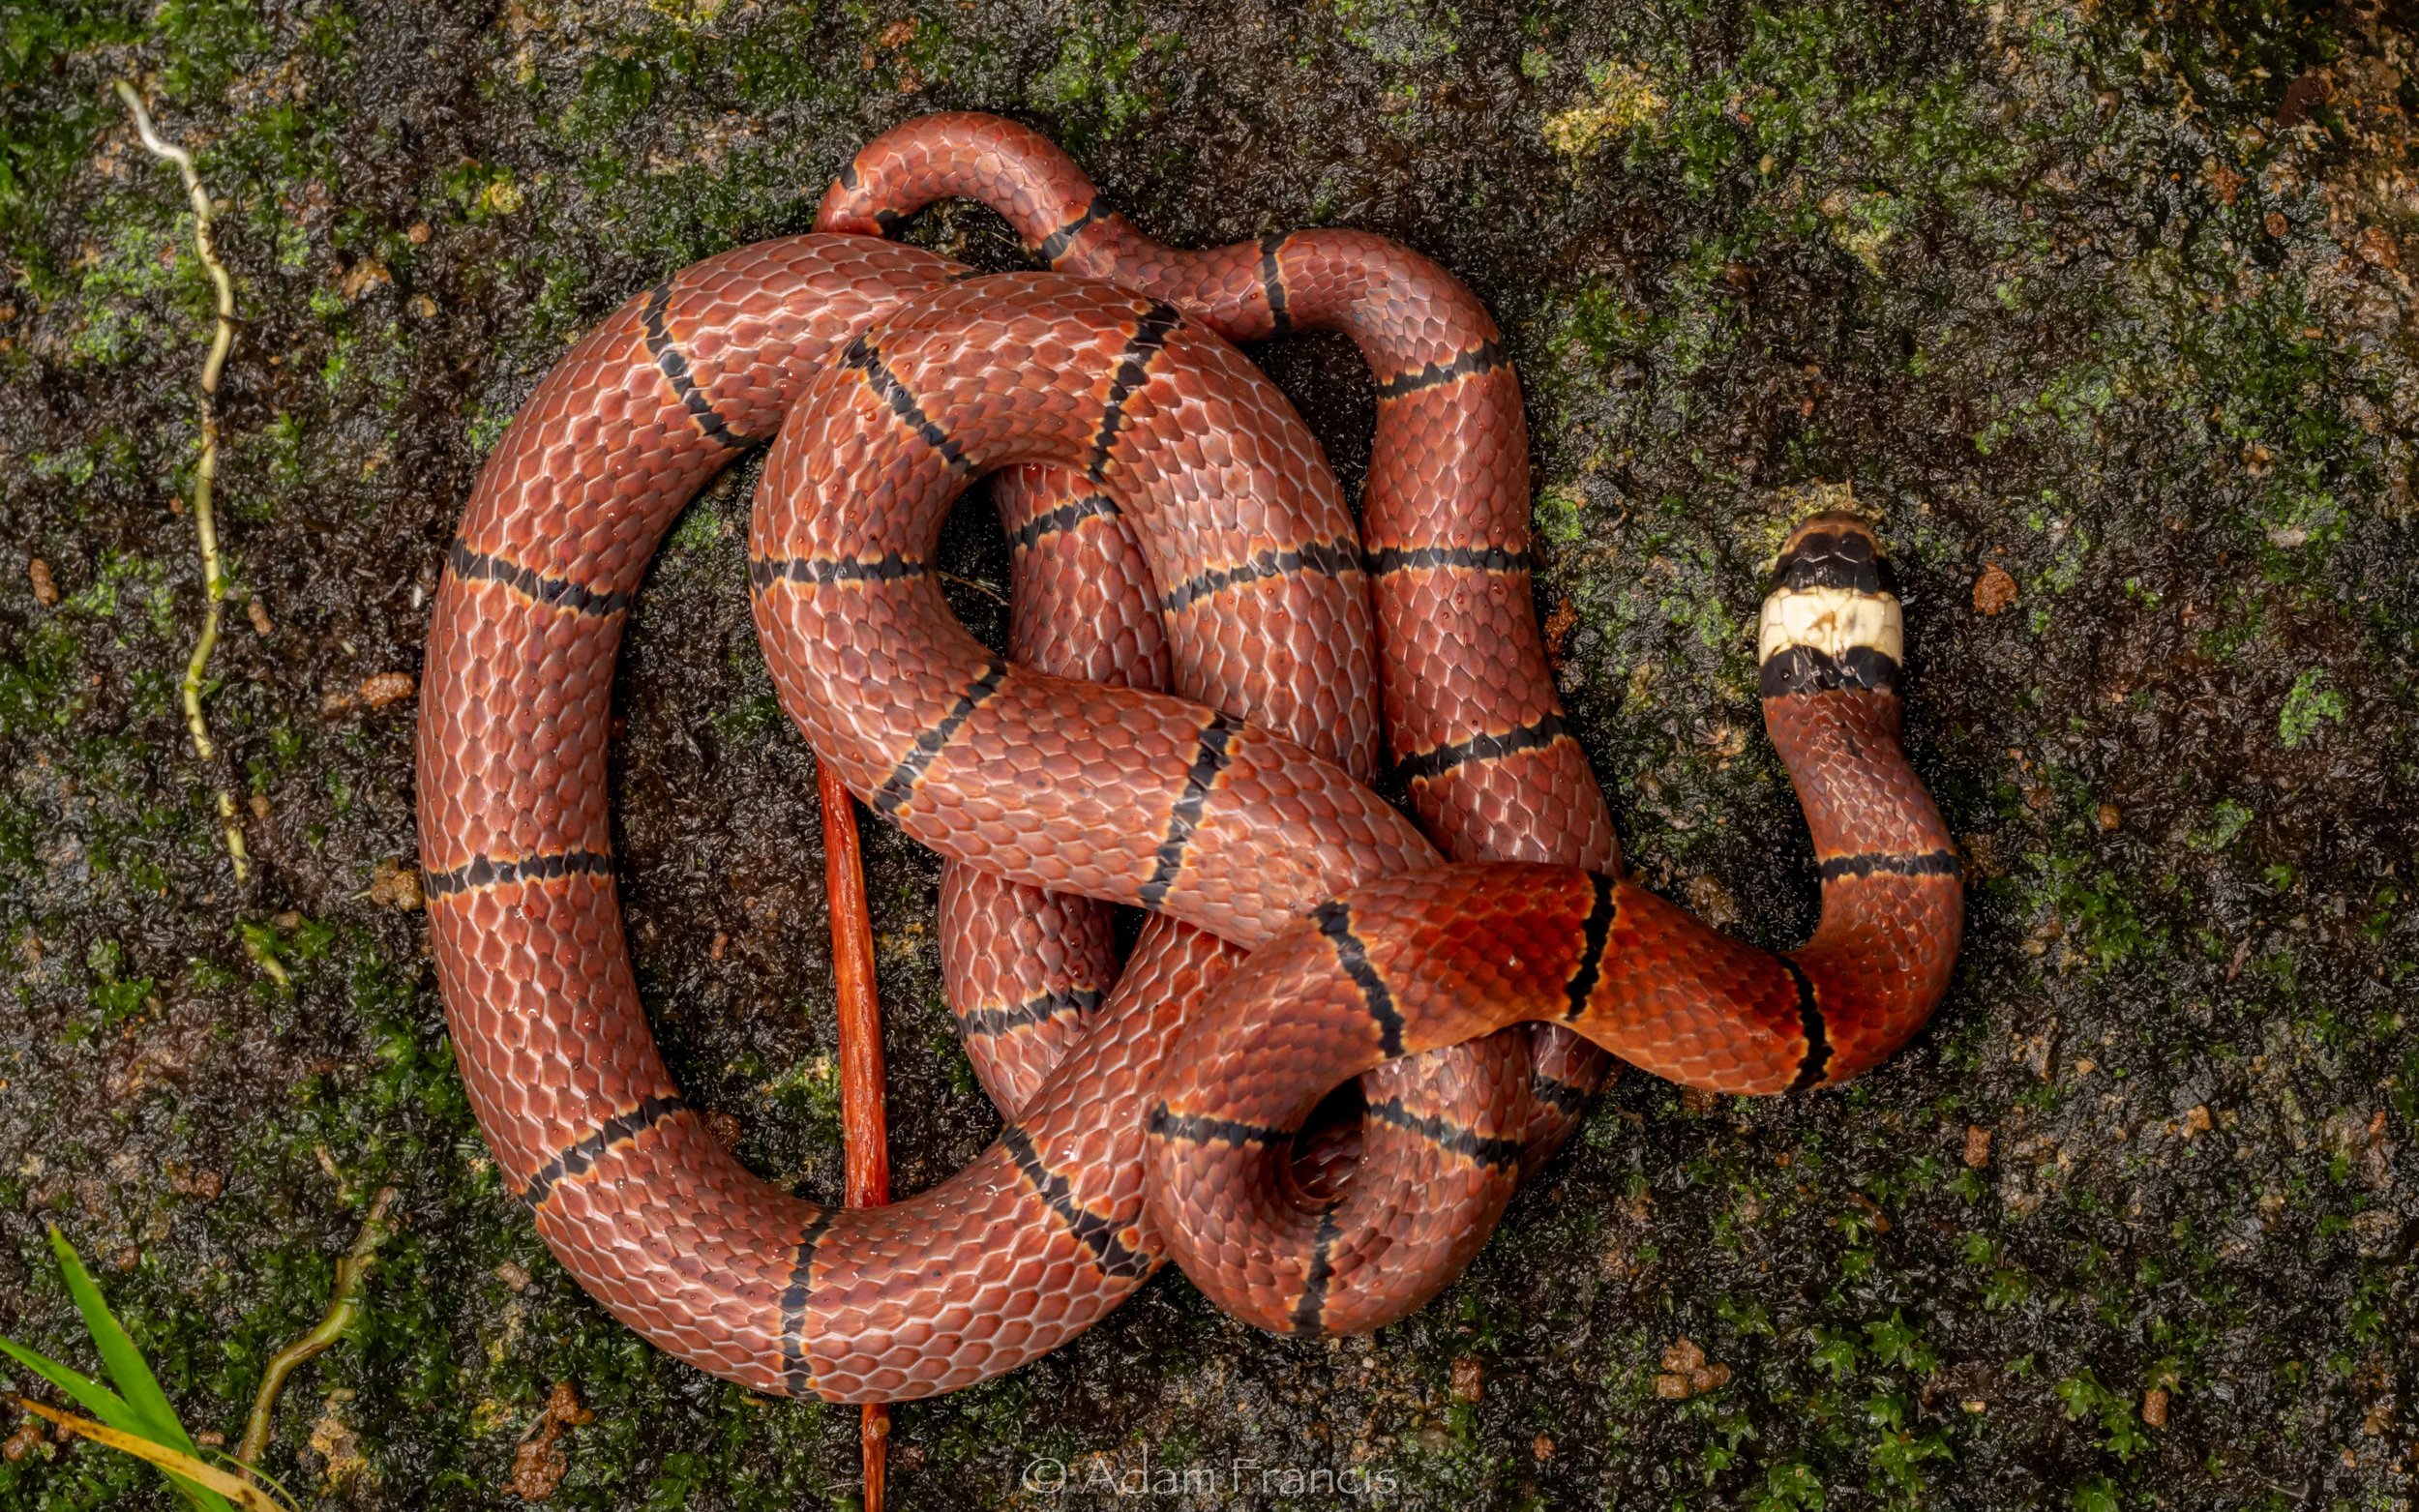 McClelland's Coral Snake - Sinomicrurus annularis